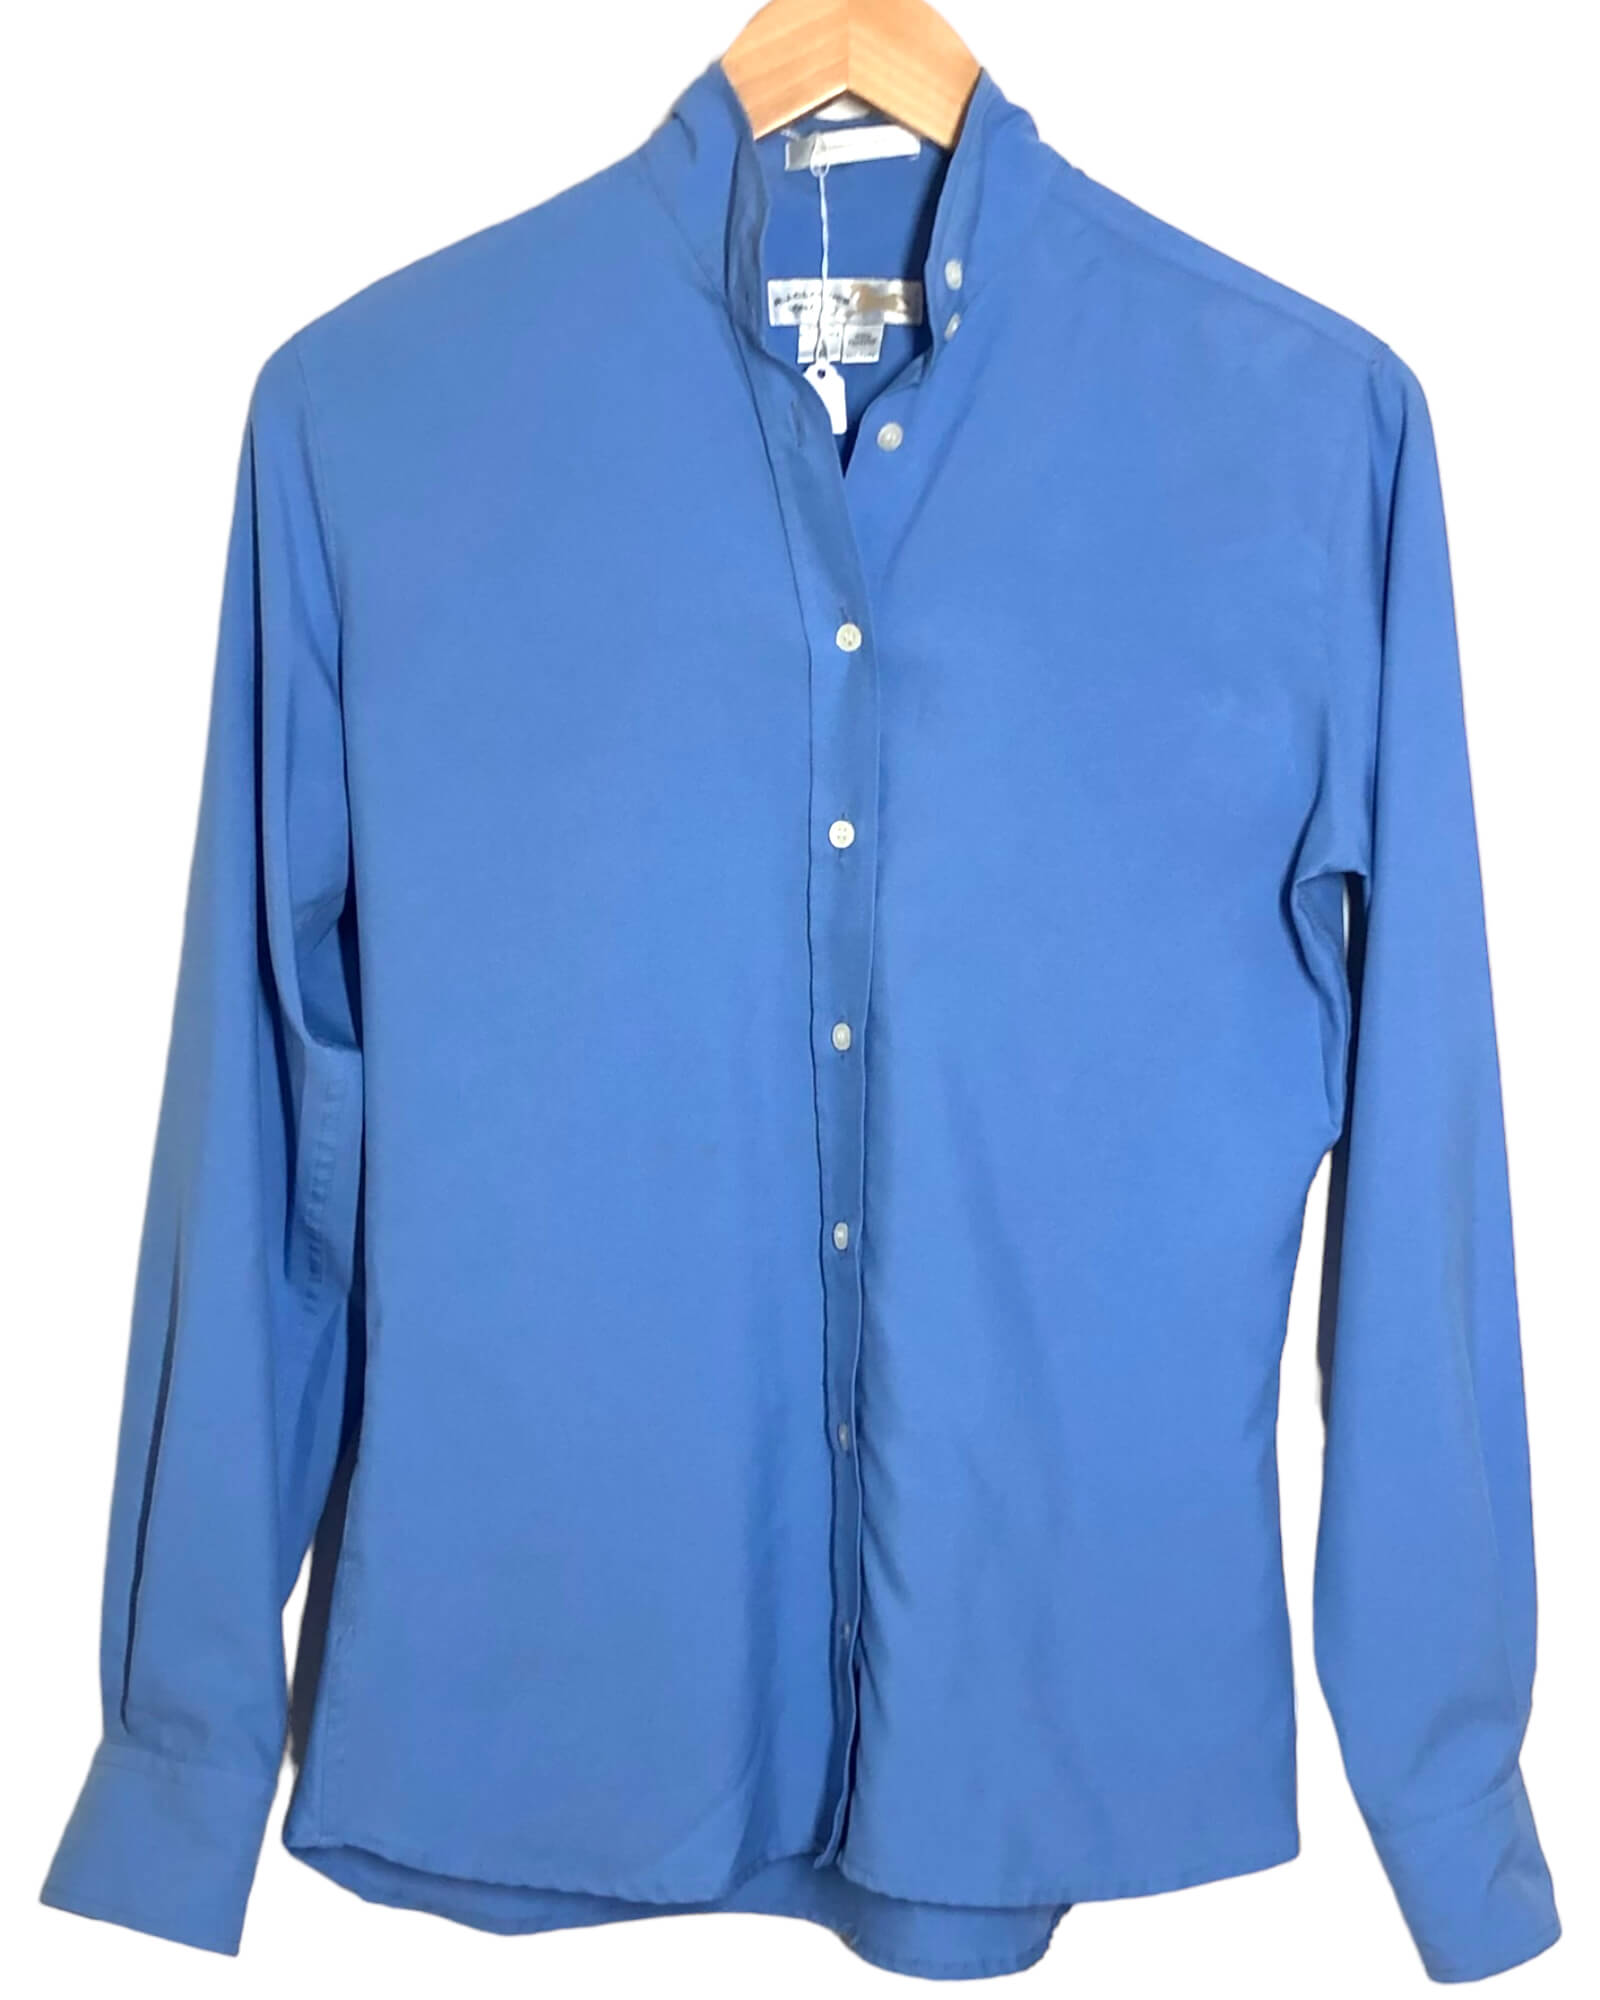 Cool Summer RJ CLASSICS STERLING CLASSIC blue button-down shirt